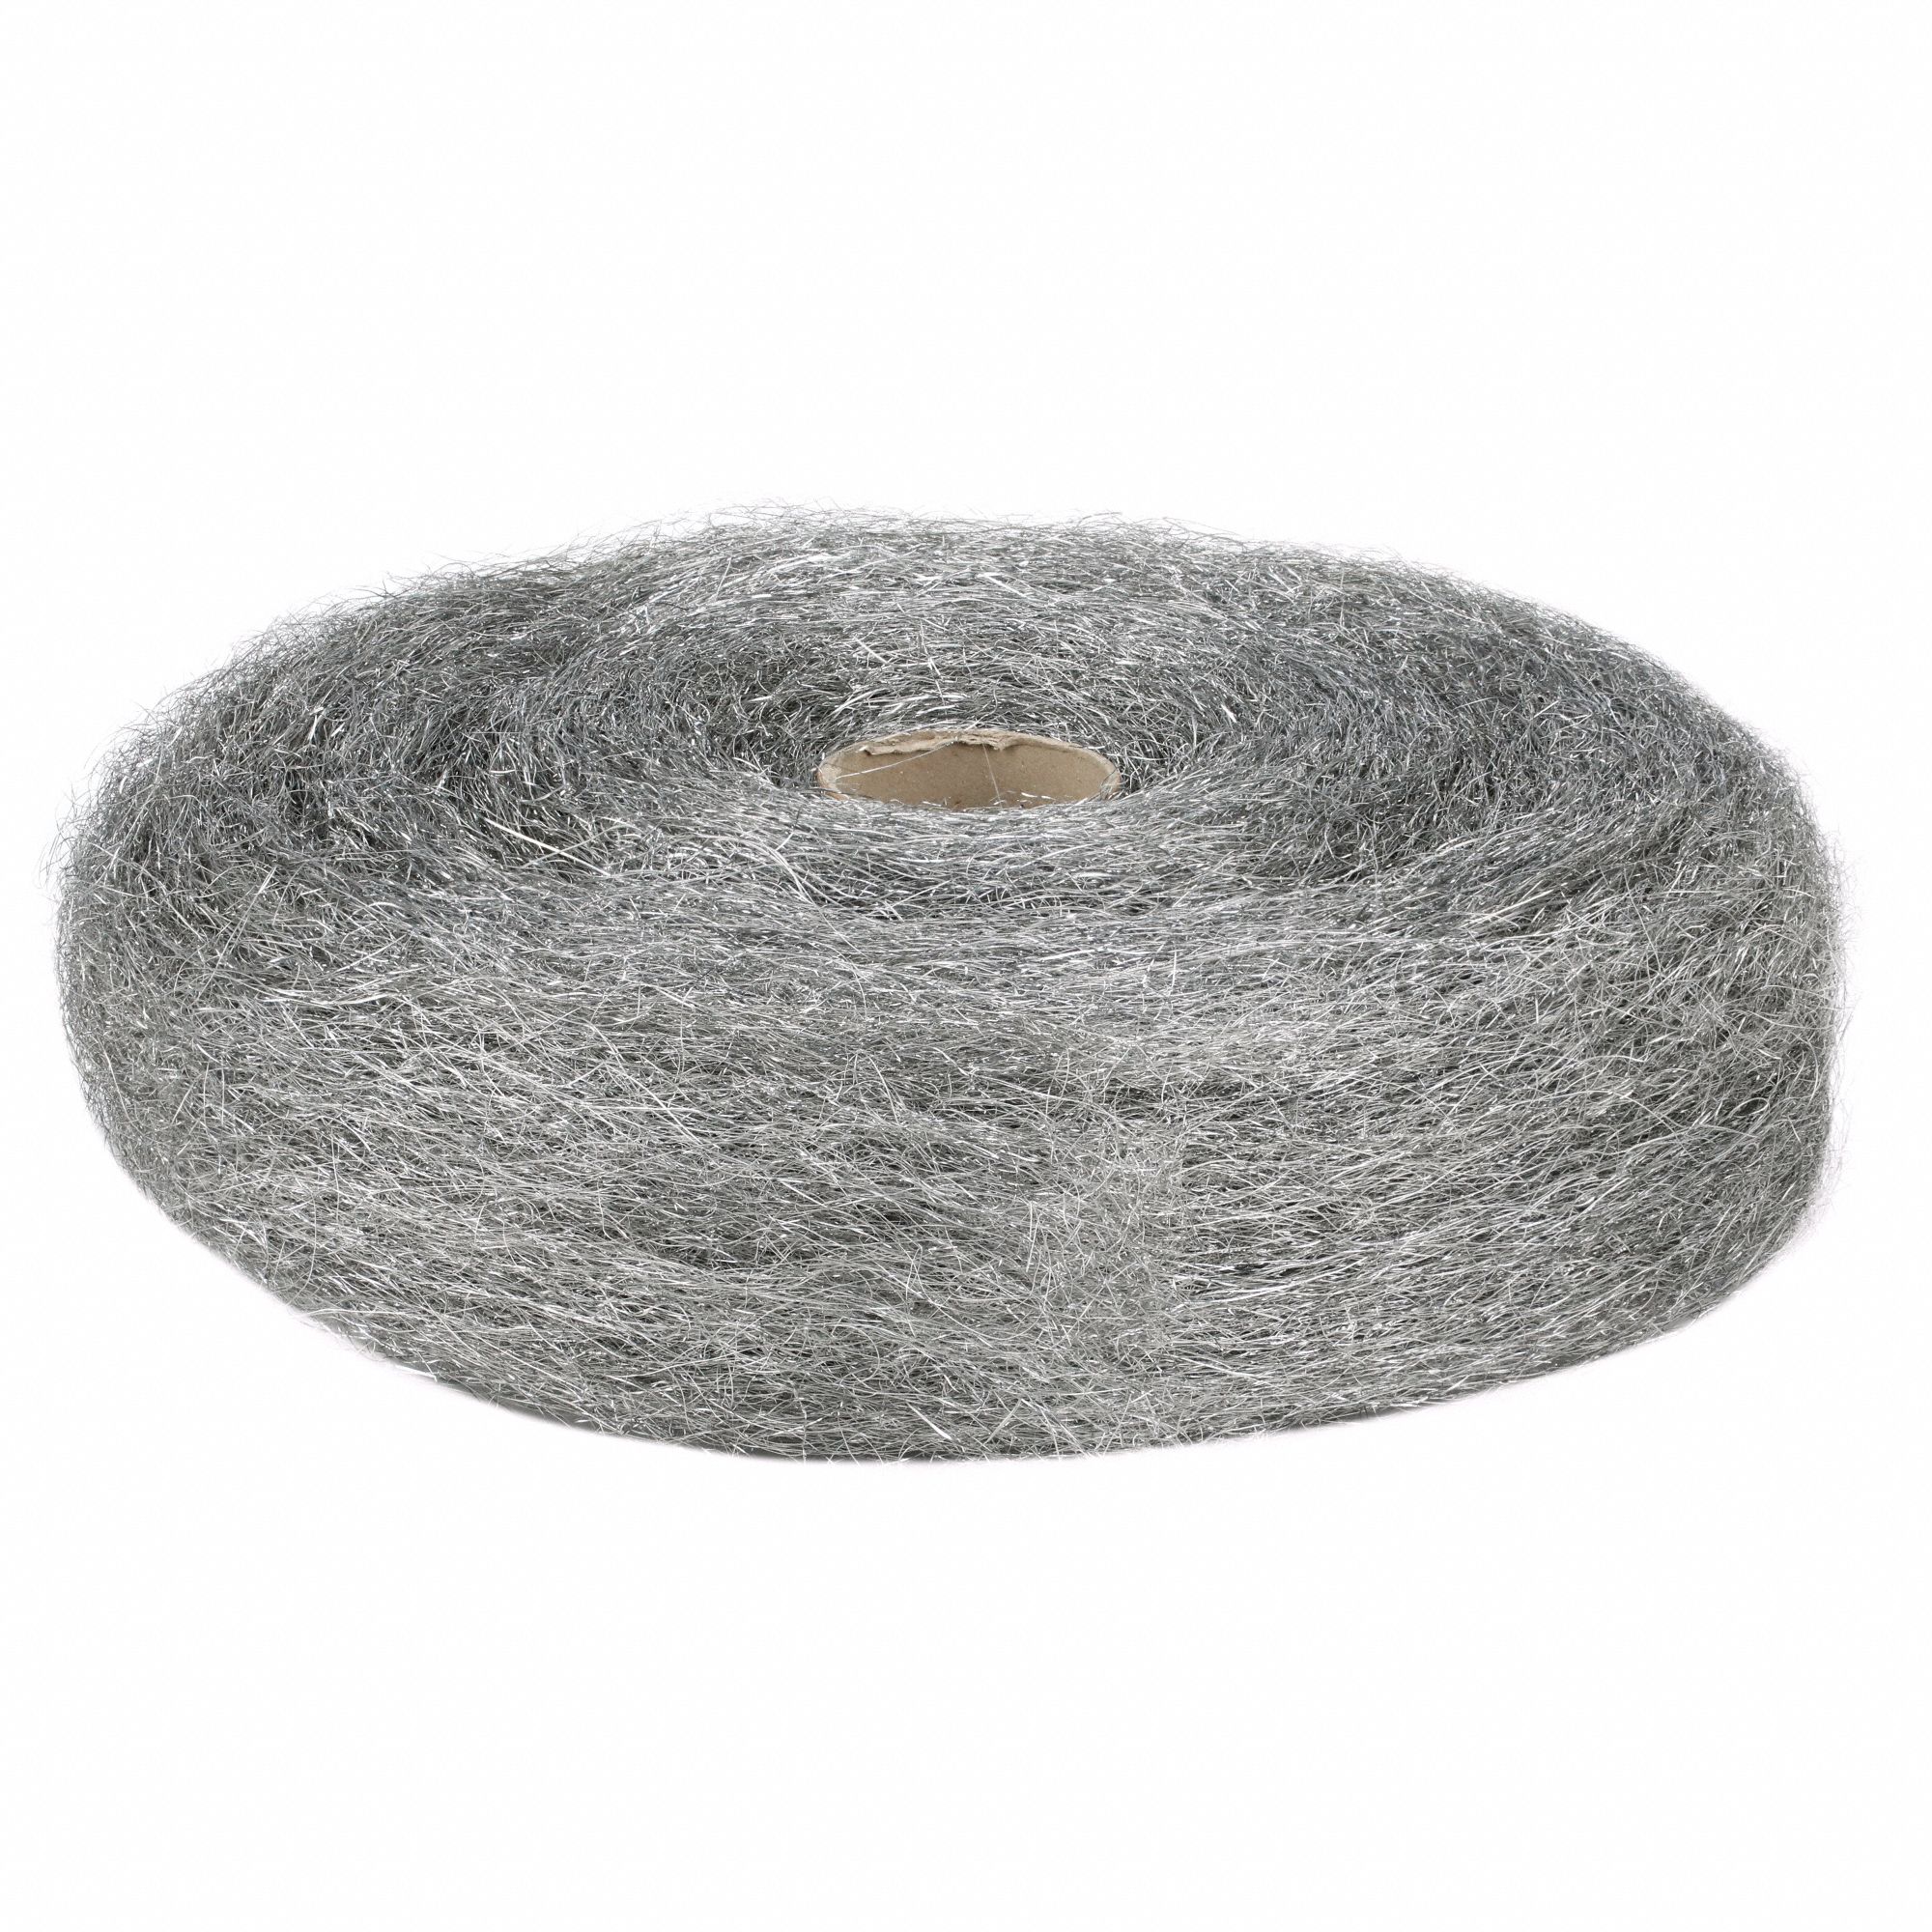  #00 Steel Wool, 5 lb Roll : Industrial & Scientific